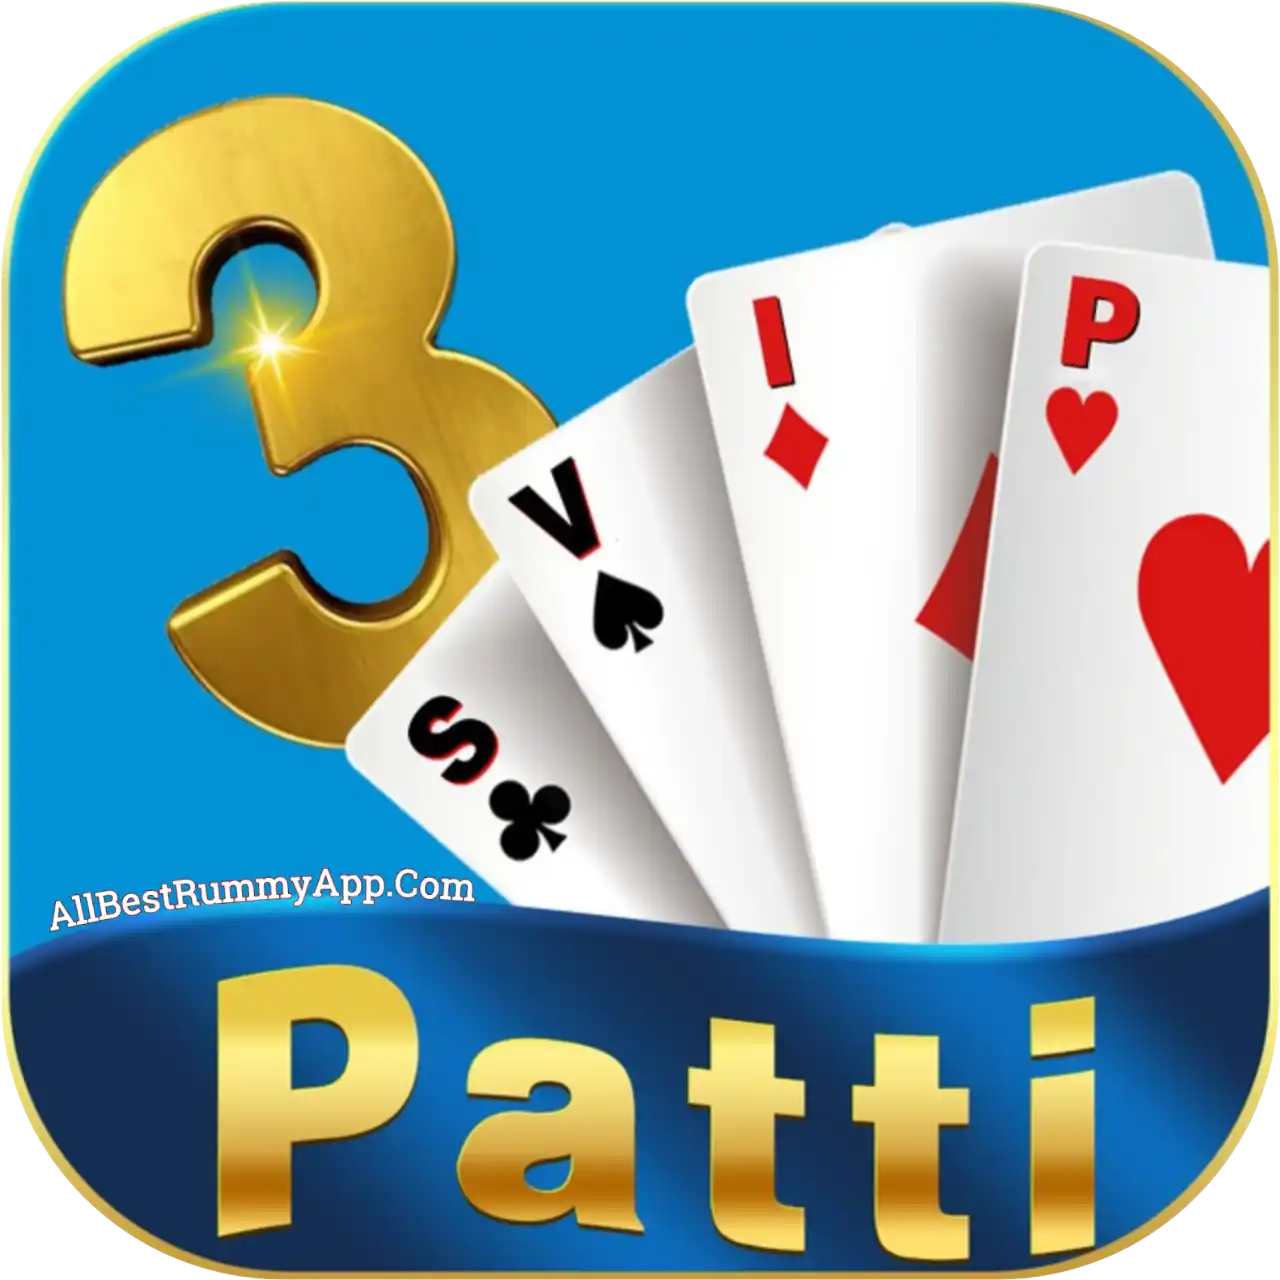 SVIP 3 Patti - All Best Rummy App